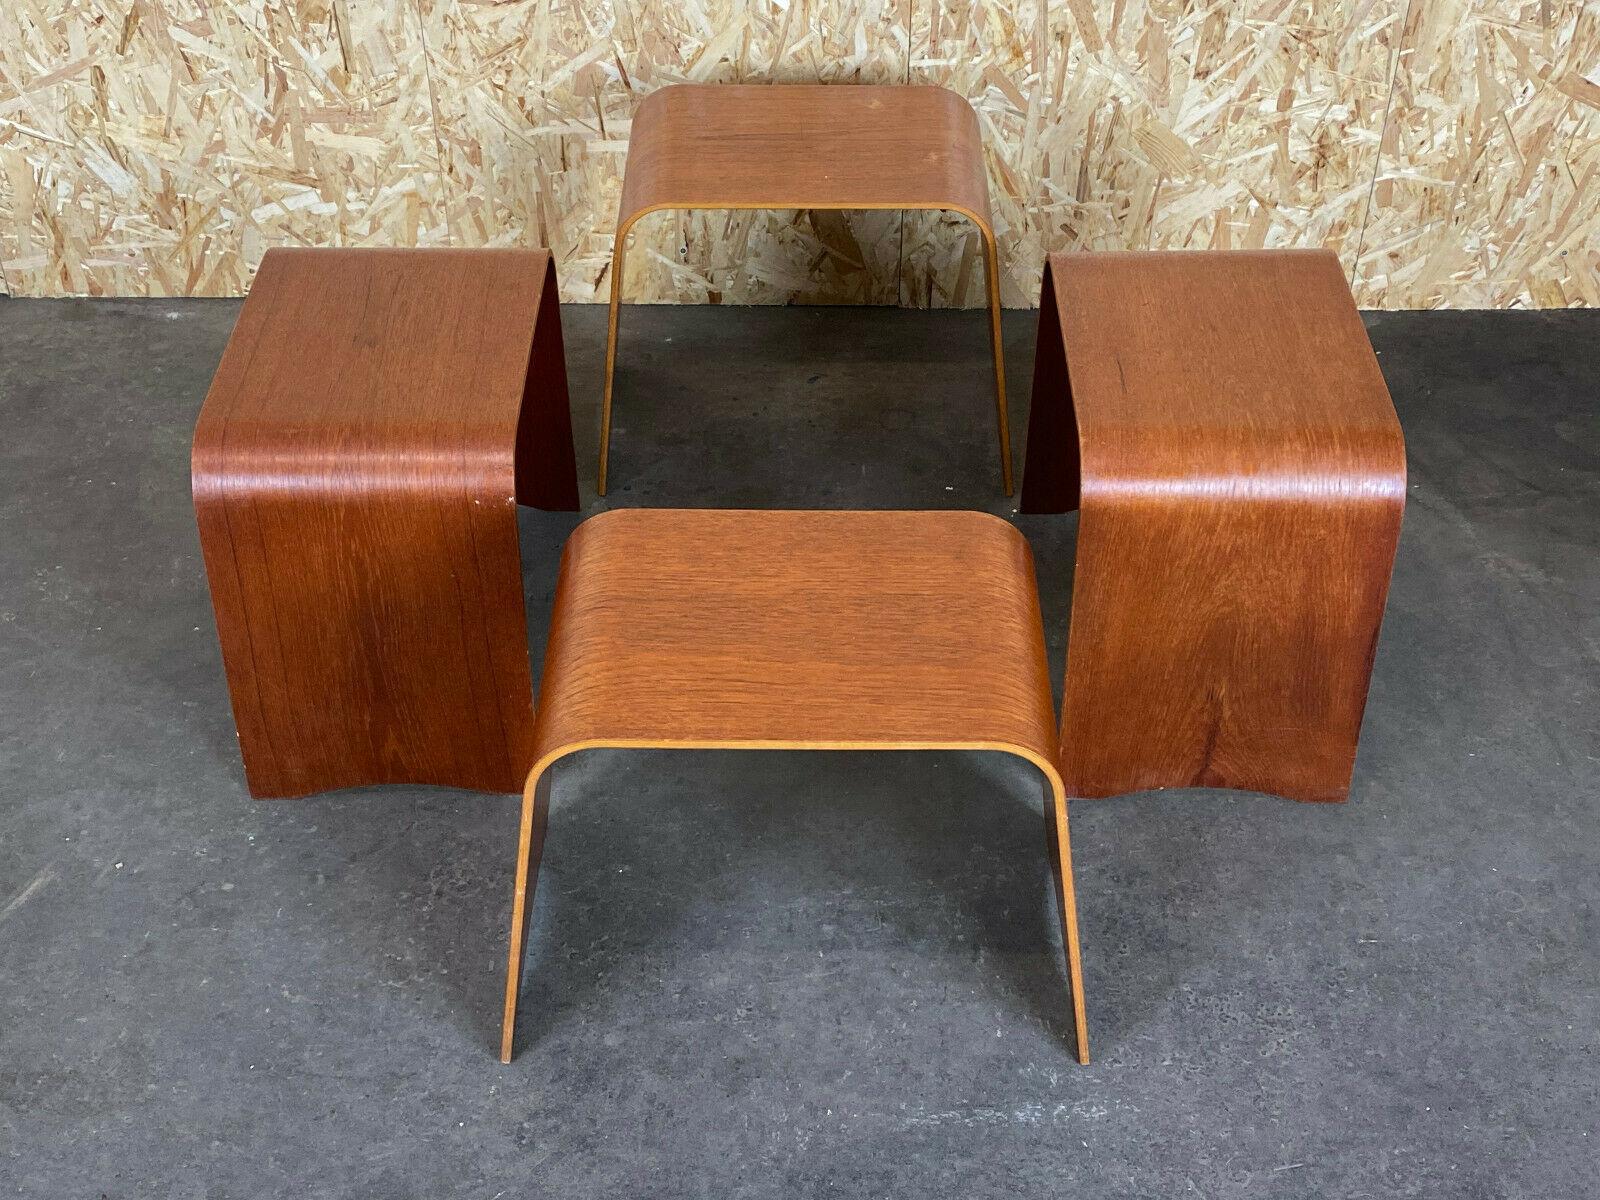 50s 60s Set of 4 Hans Ludvigsen stools teak stools model 4515 Fritz Hansen

Object: 4x stools

Manufacturer: Fritz Hansen

Condition: good - vintage

Age: around 1960-1970

Dimensions:

53.5cm x 30cm x 41cm

Other notes:

The